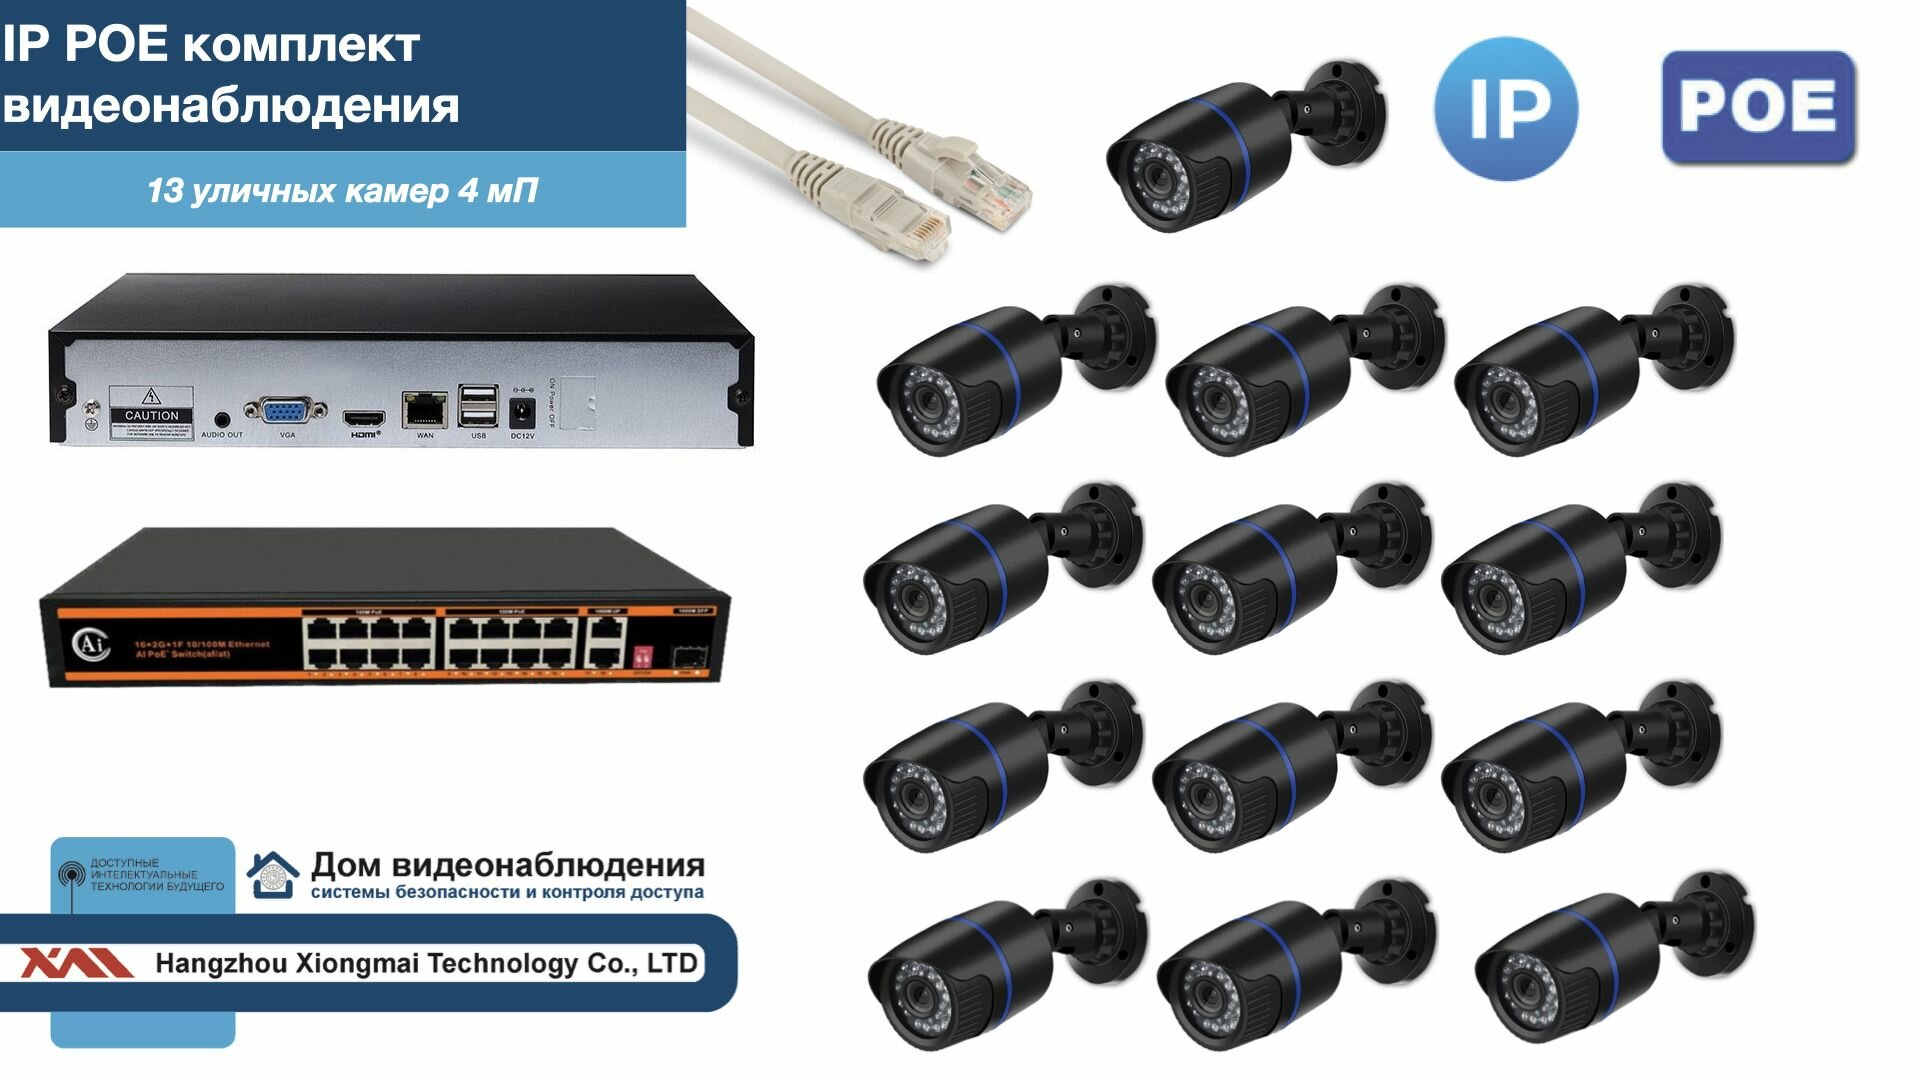 Полный IP POE комплект видеонаблюдения на 13 камер (KIT13IPPOE100B4MP)